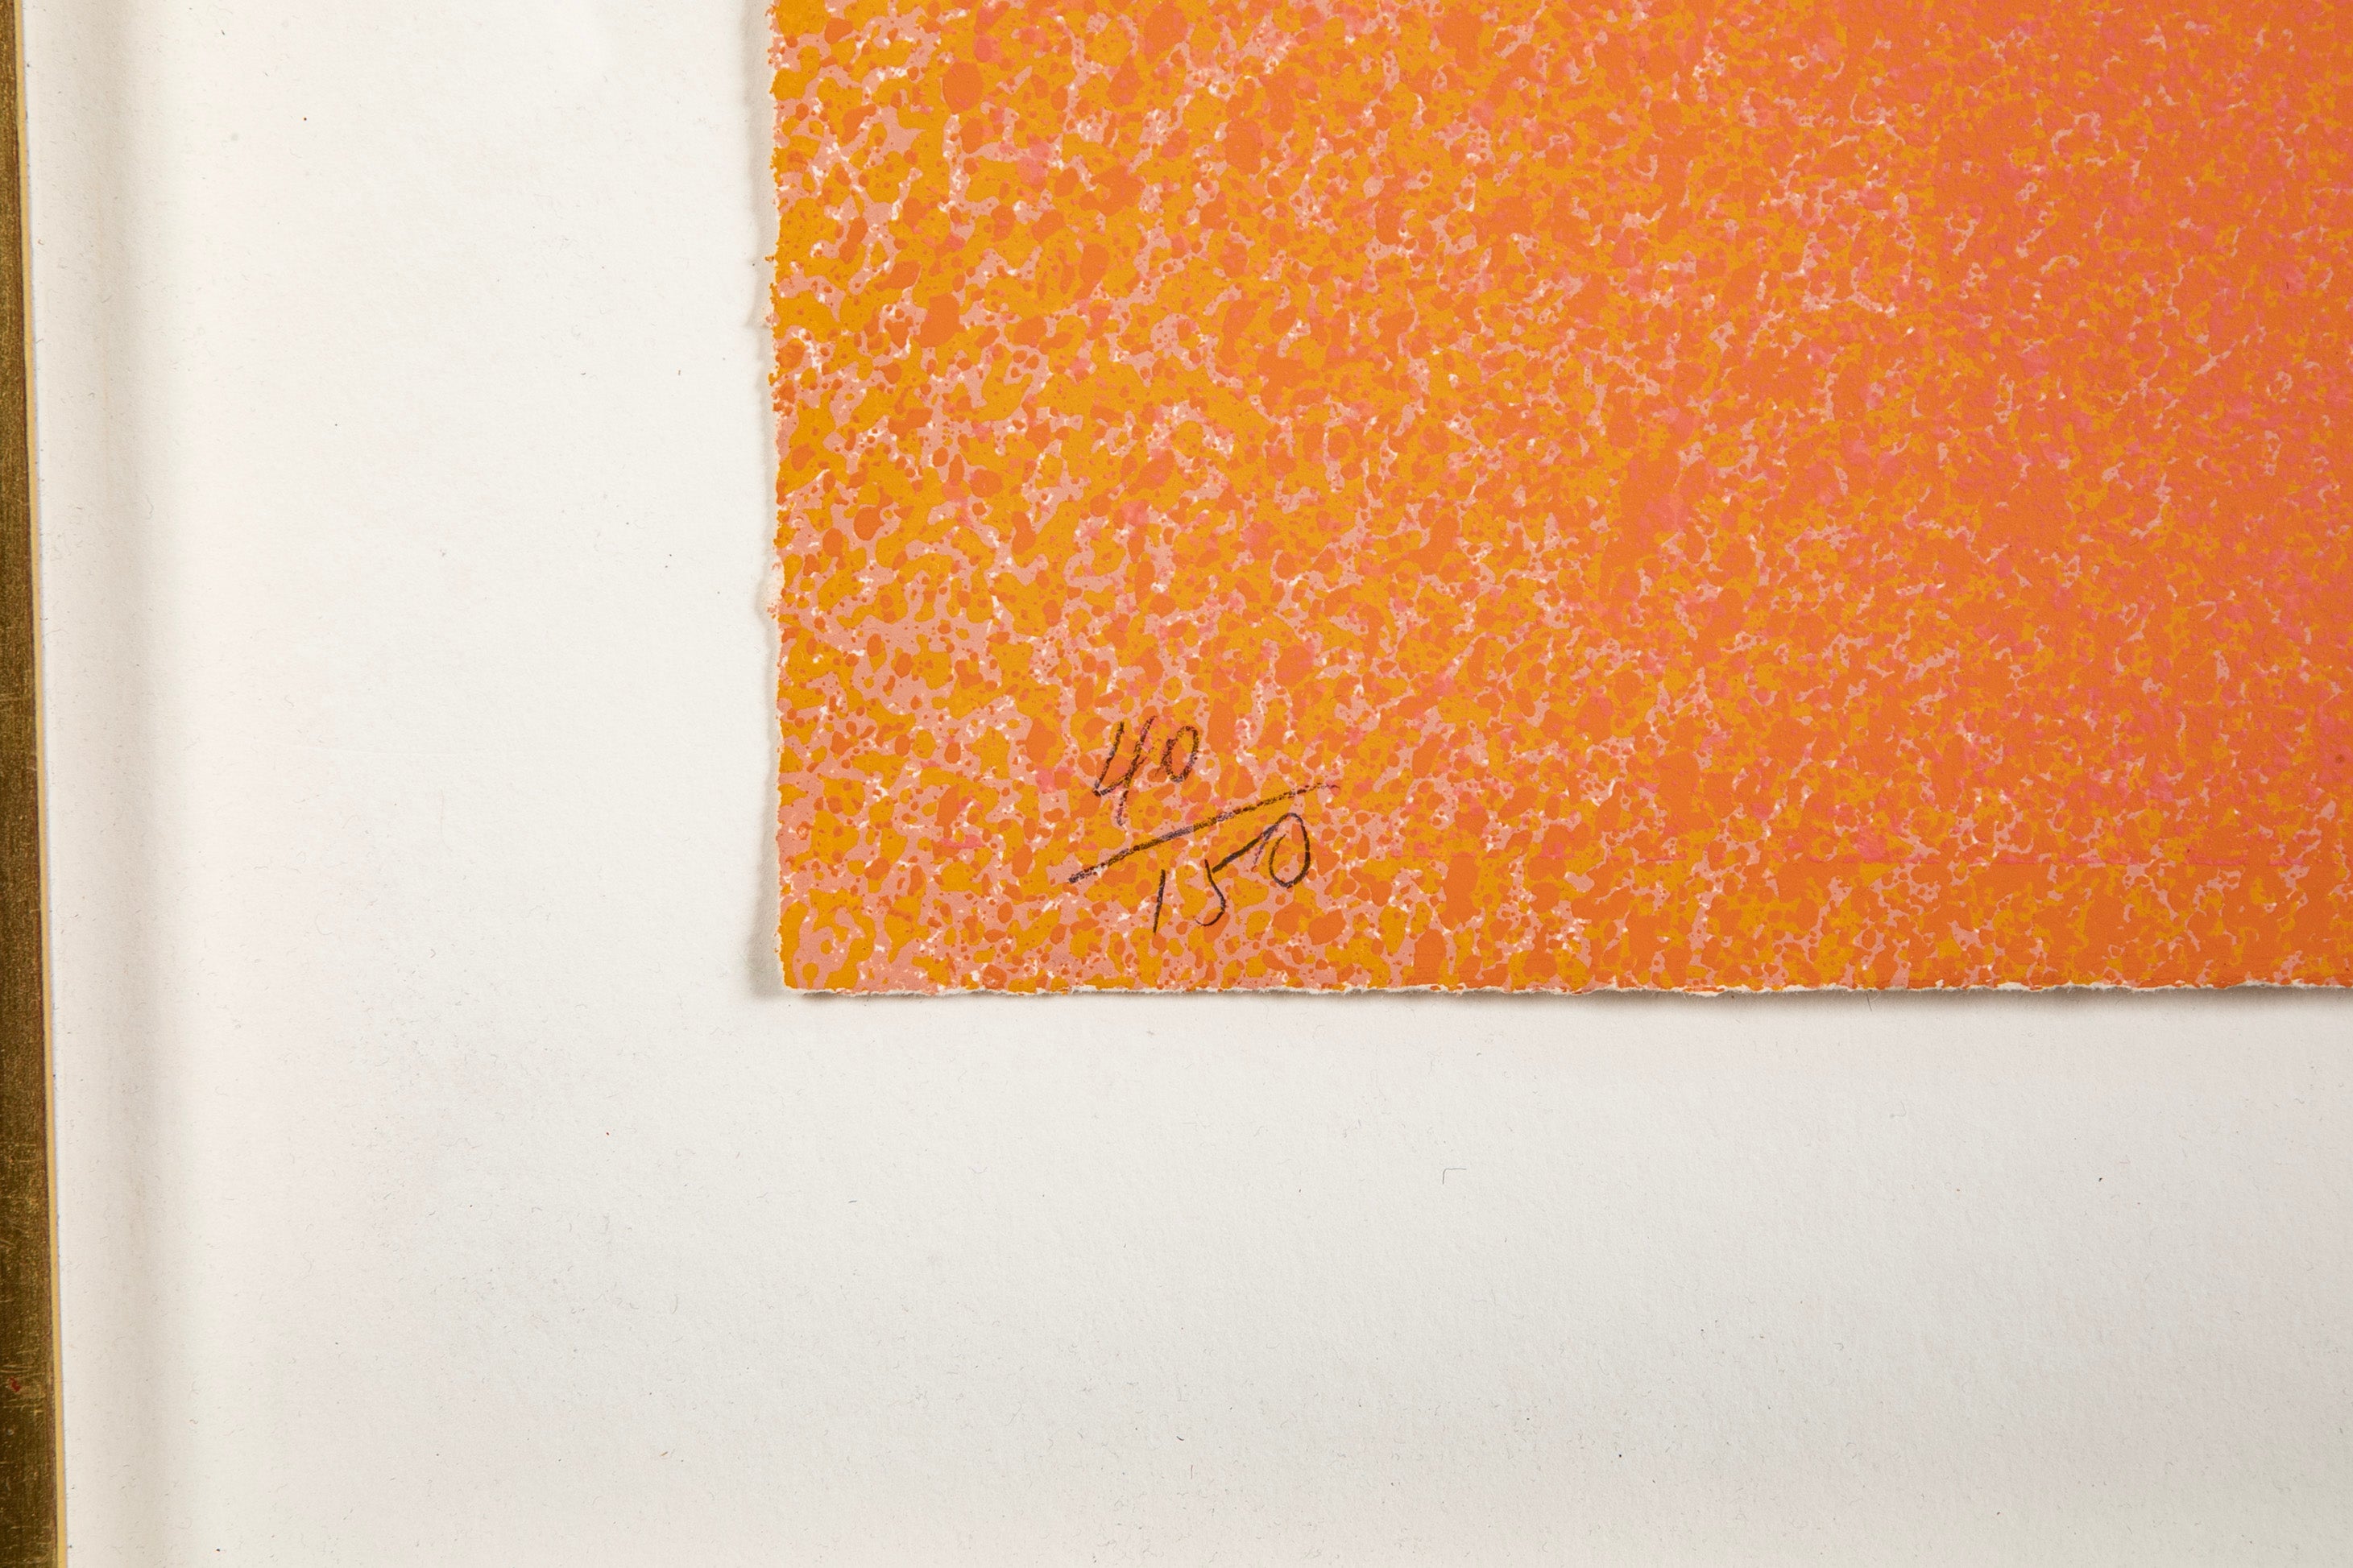 Jules Olitski "Magenta / Orange with Tan" from "Graphics Suite # 1"